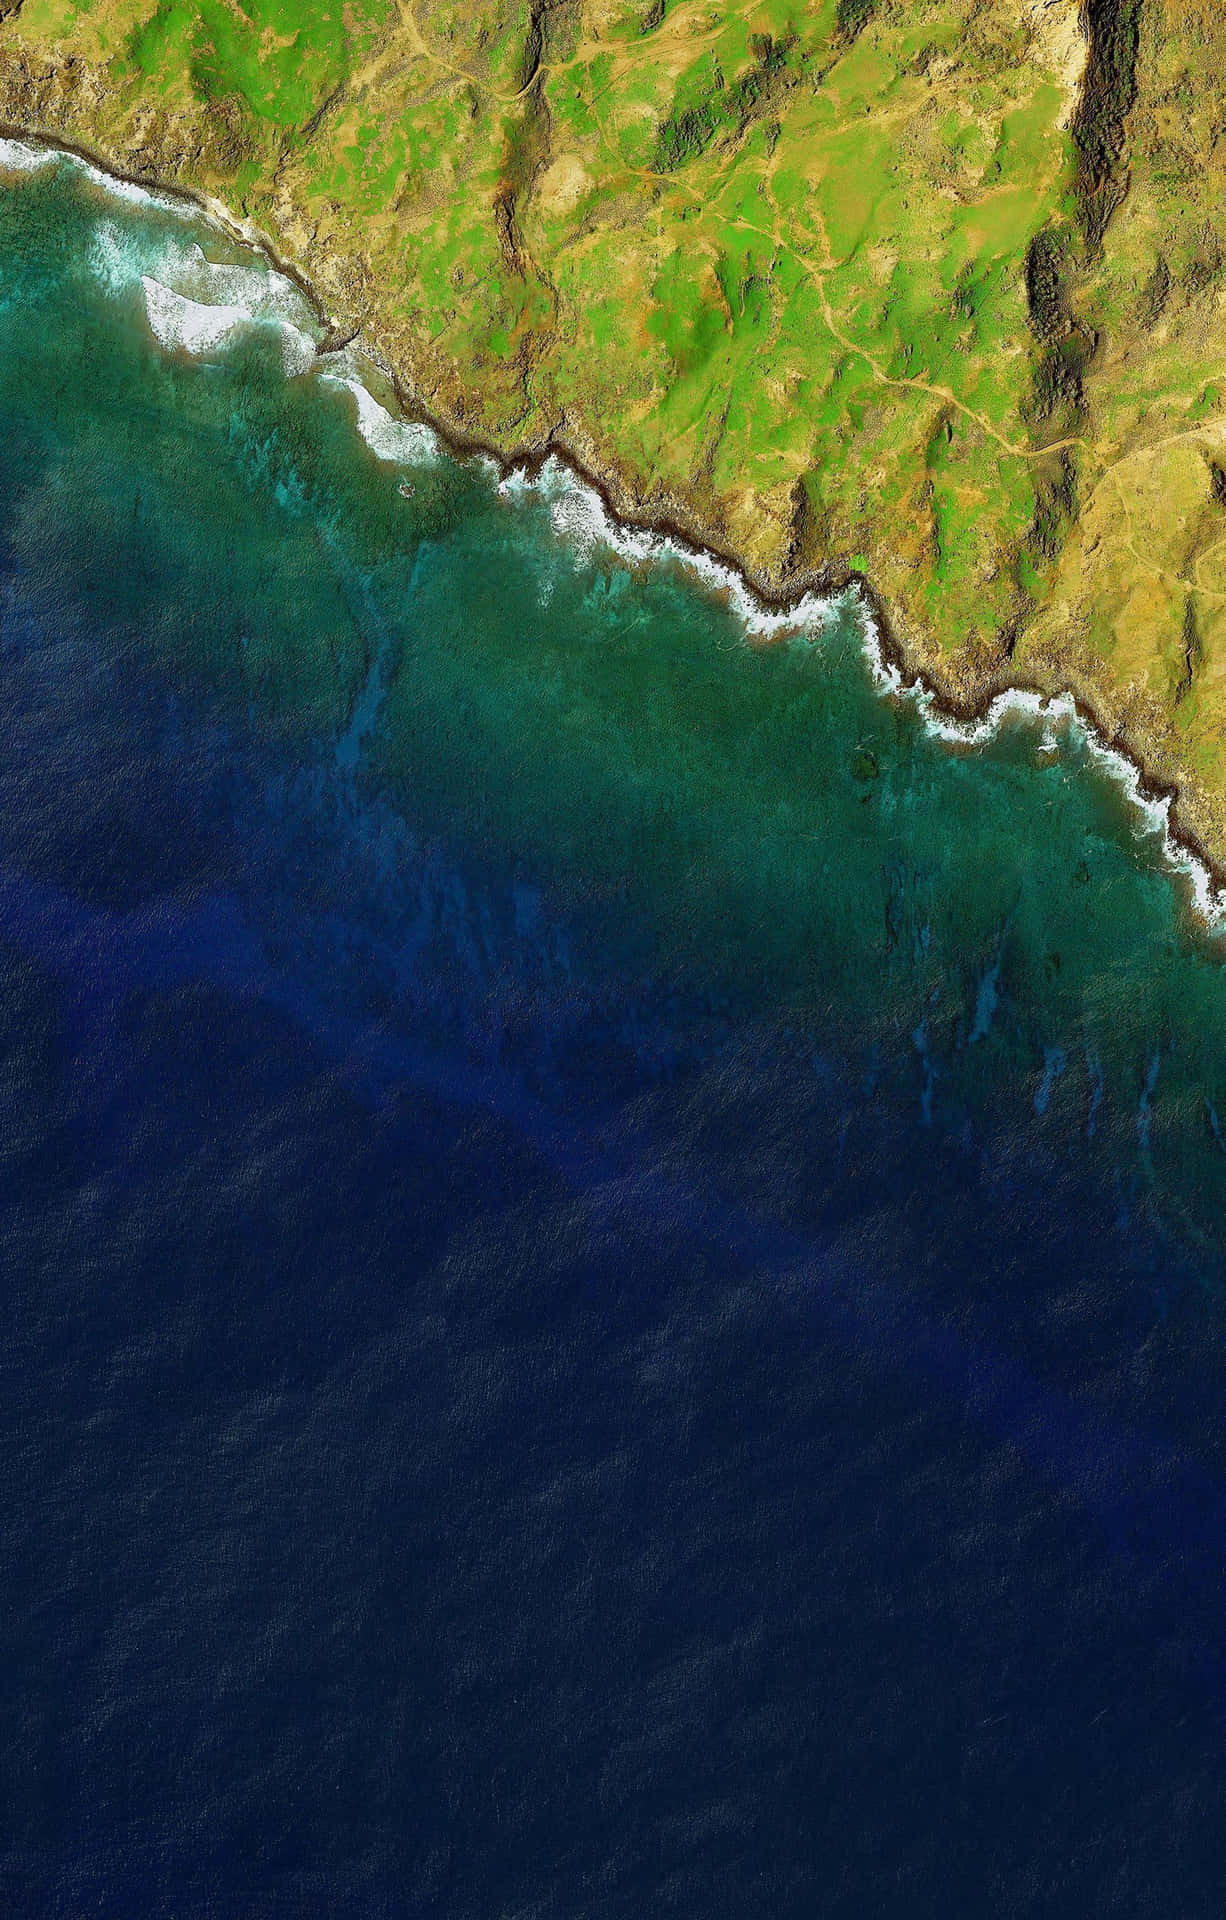 Ensatellitbild Av Havet Och En Strand Wallpaper